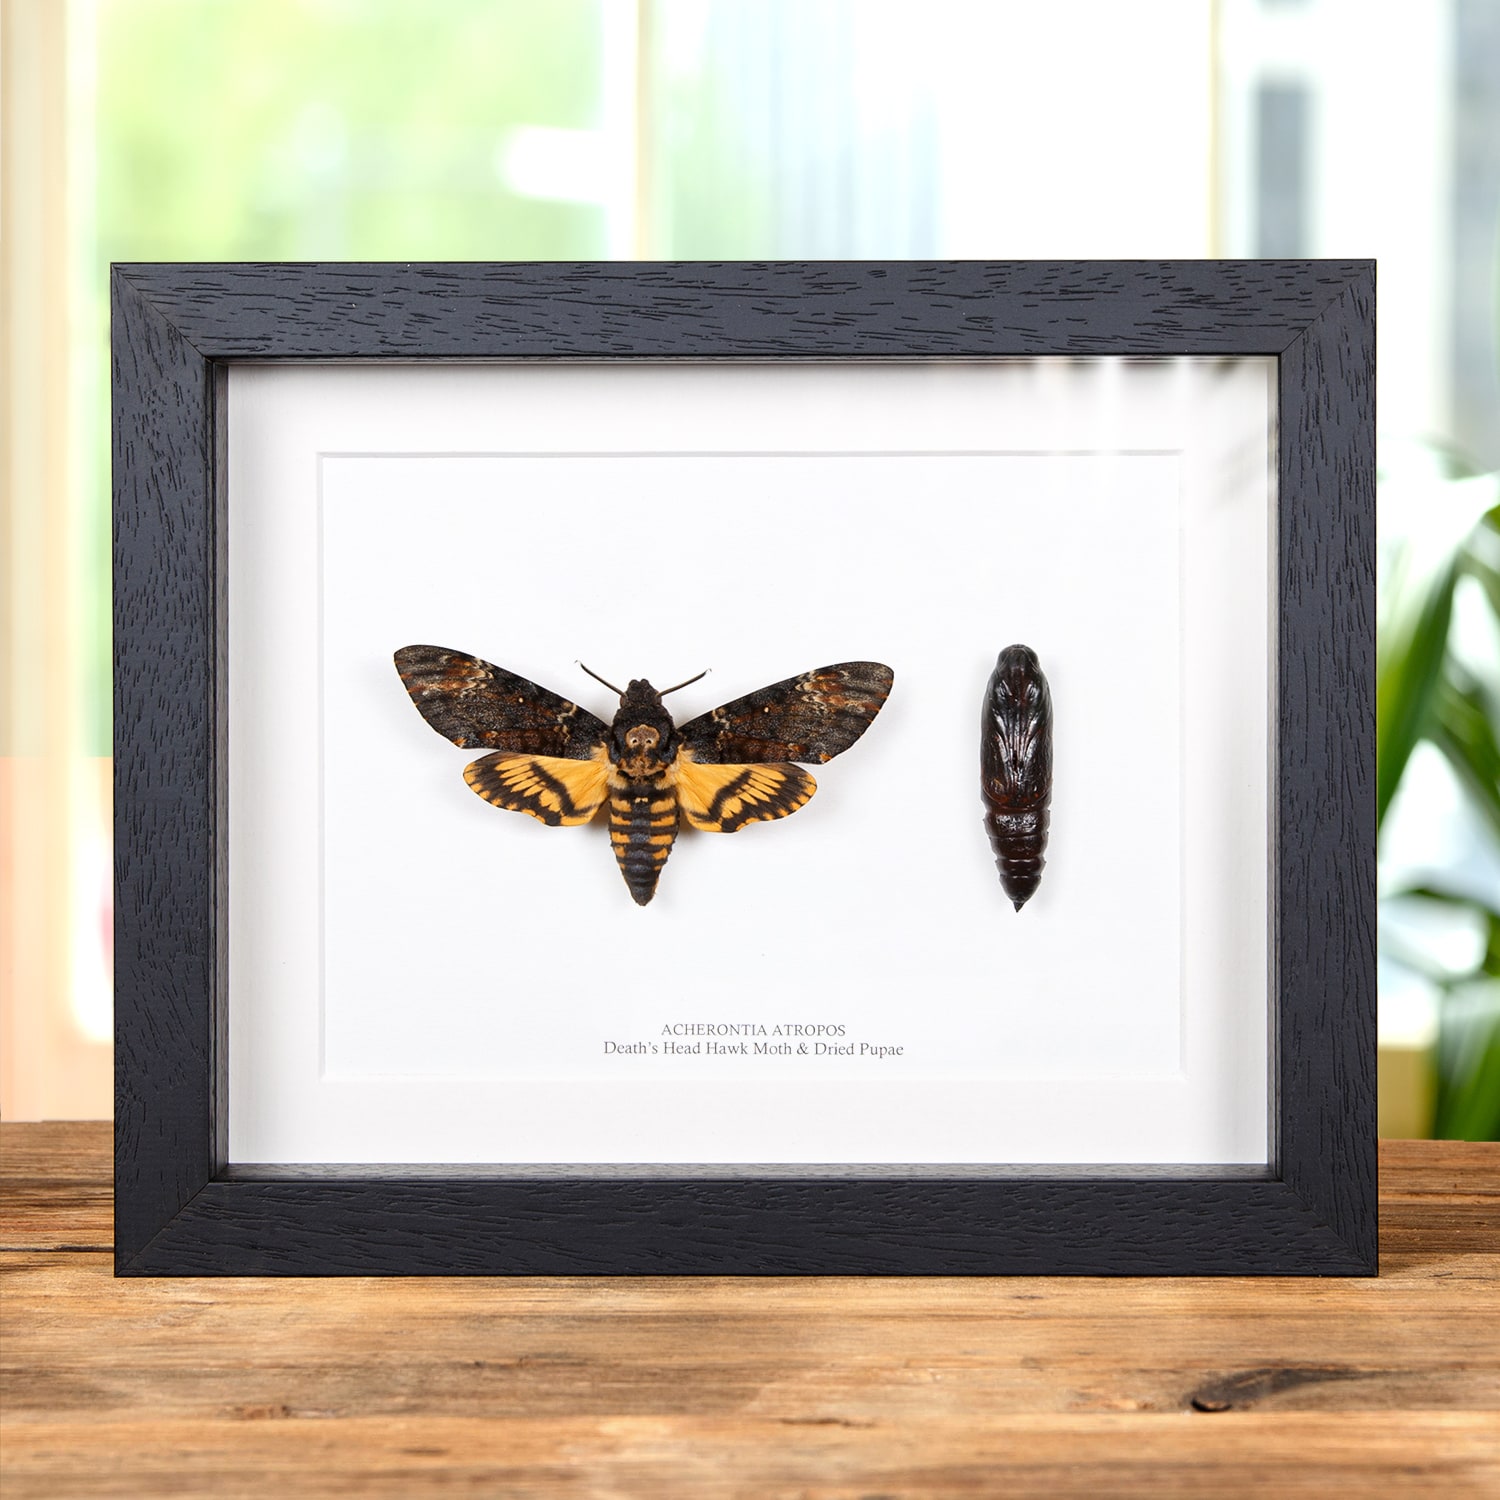 Pupae and Deaths Head Hawk Moth in Box Frame (Acherontia atropos)